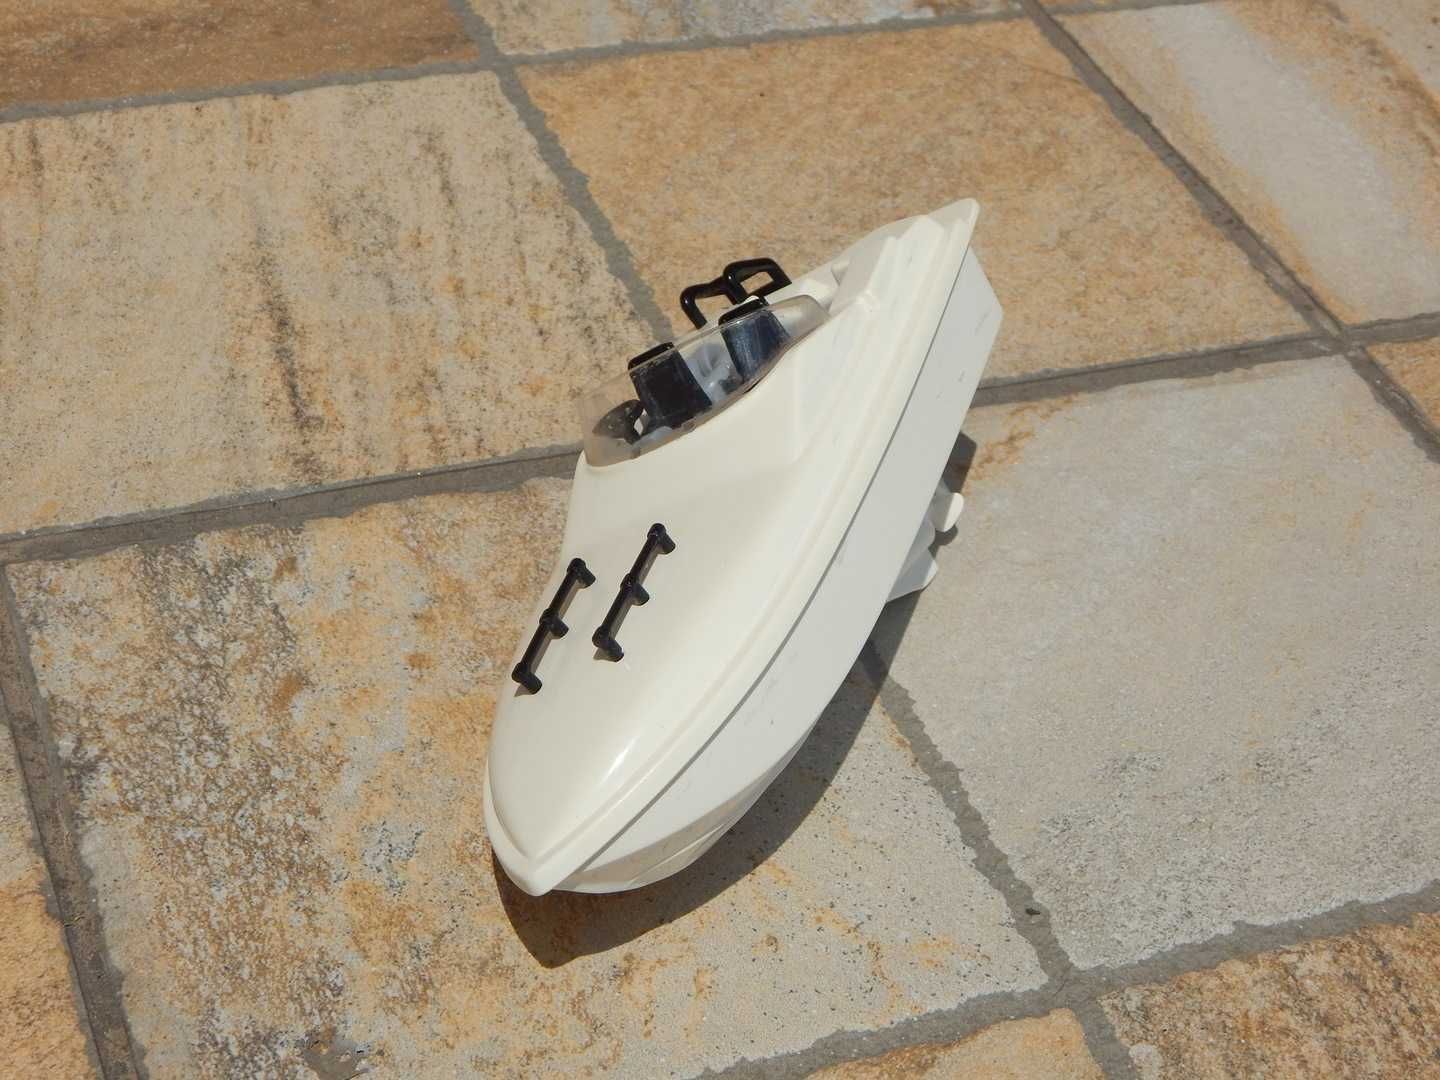 Macheta jucarie salupa barca plastic alba 19 cm lungime